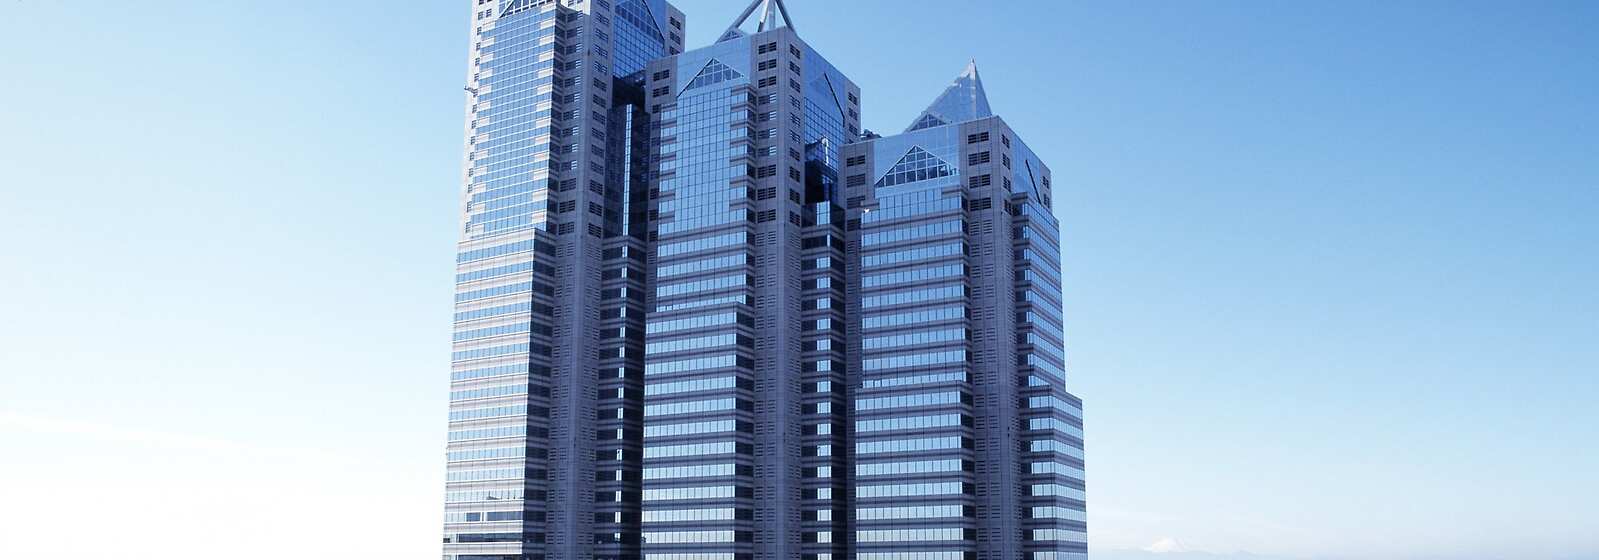 Park Hyatt Tokyo occupies the top 14 floors of the 52-storey Shinjuku Park Tower with sweeping views